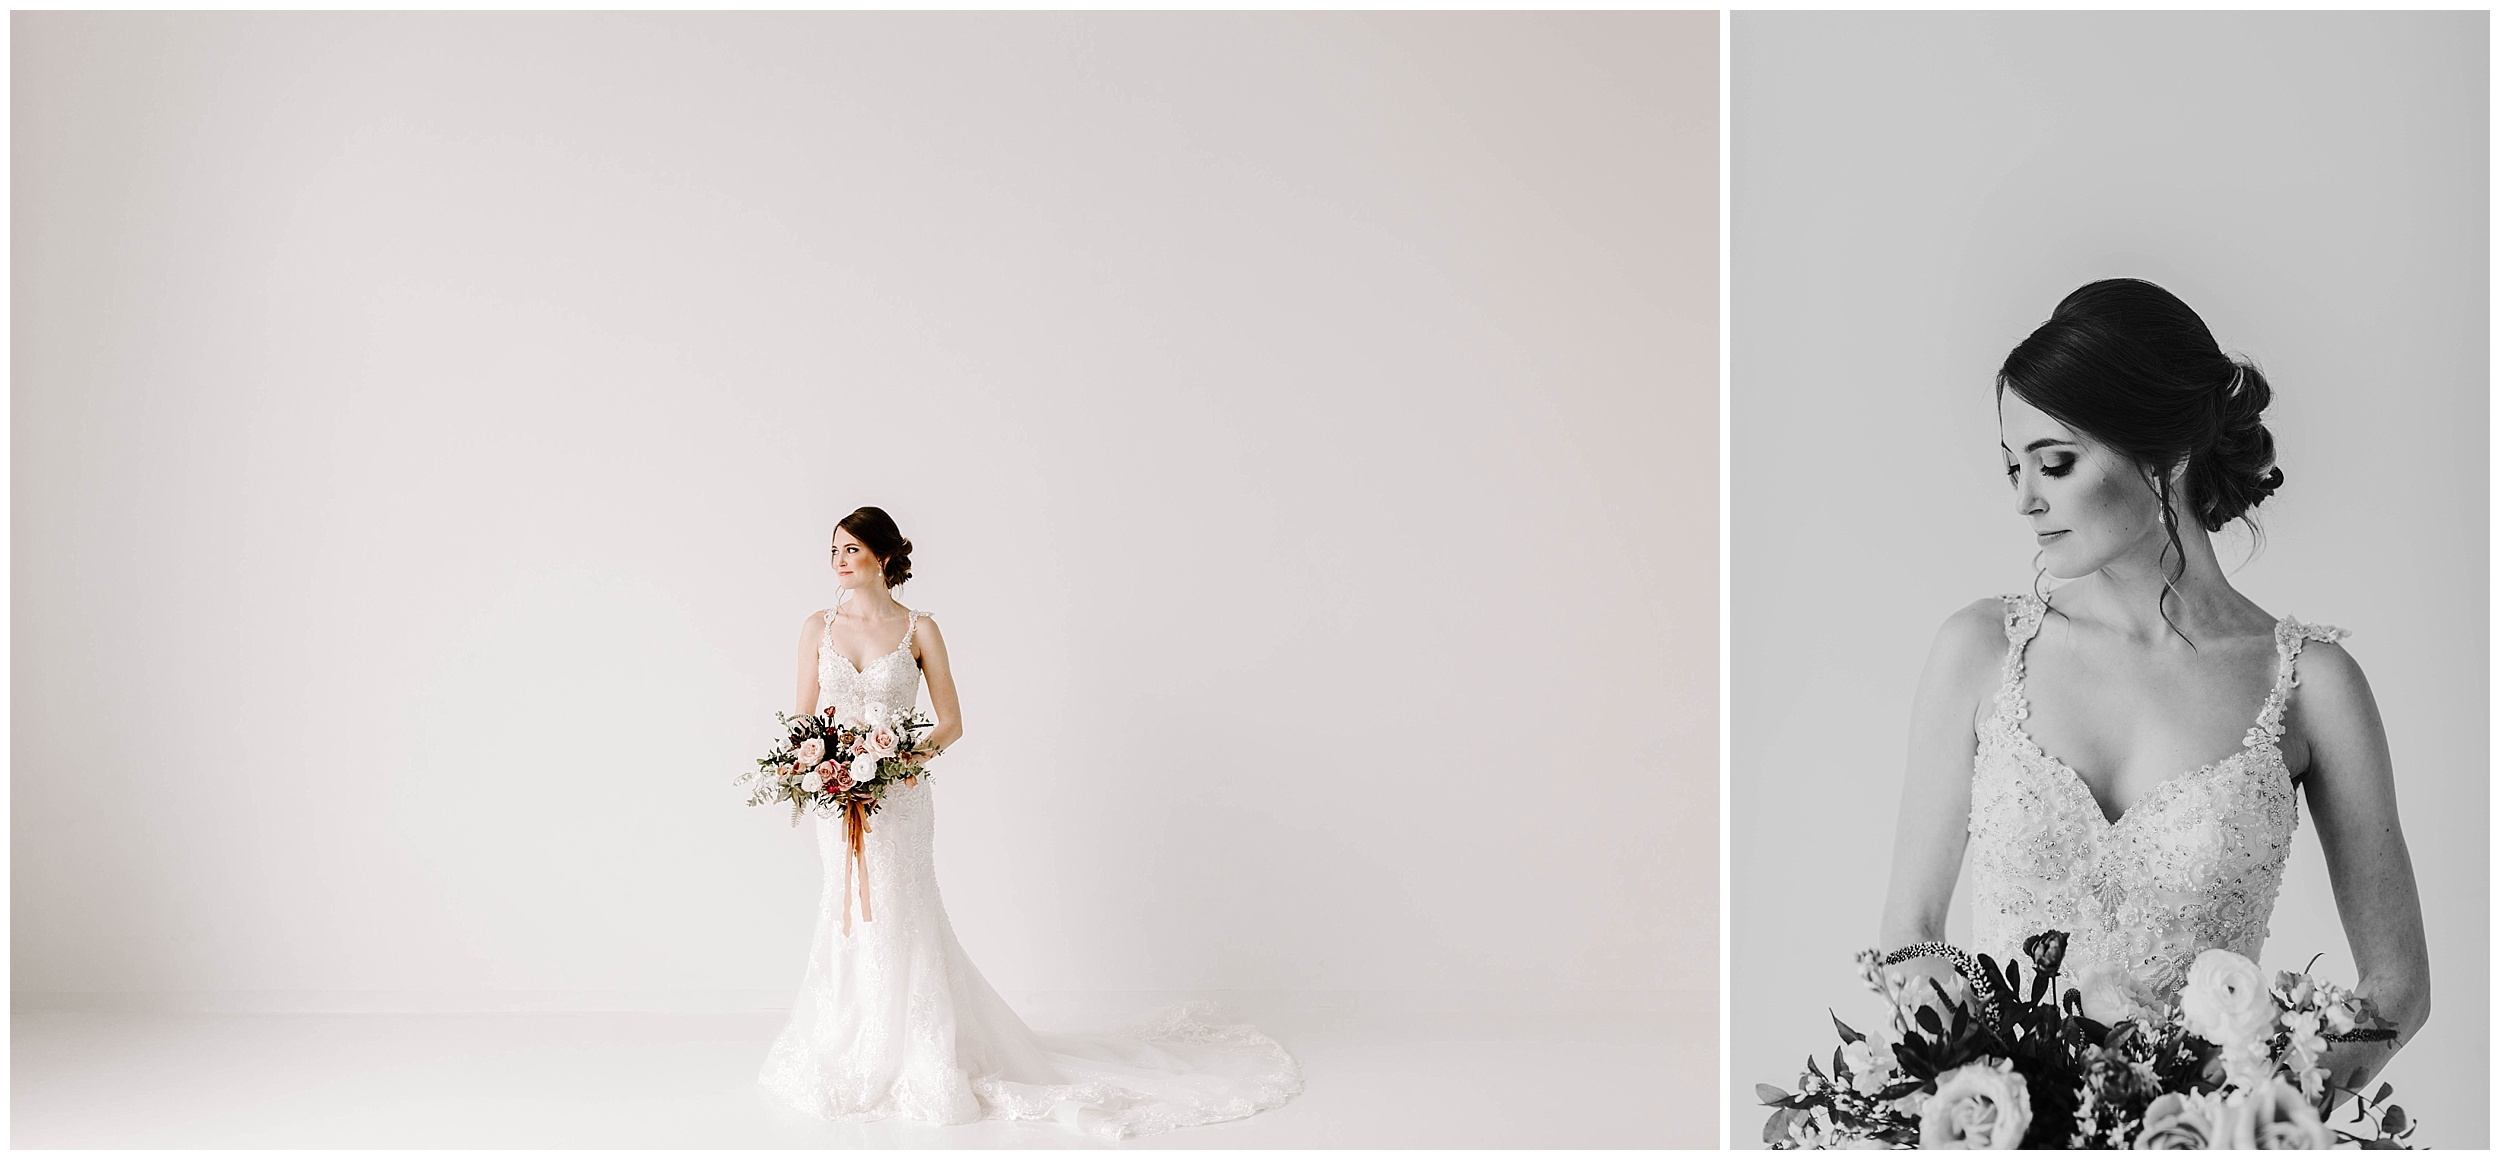 bridal portraits, SUPPLY Manheim bride and groom portraits, Madeline Isabella Photography